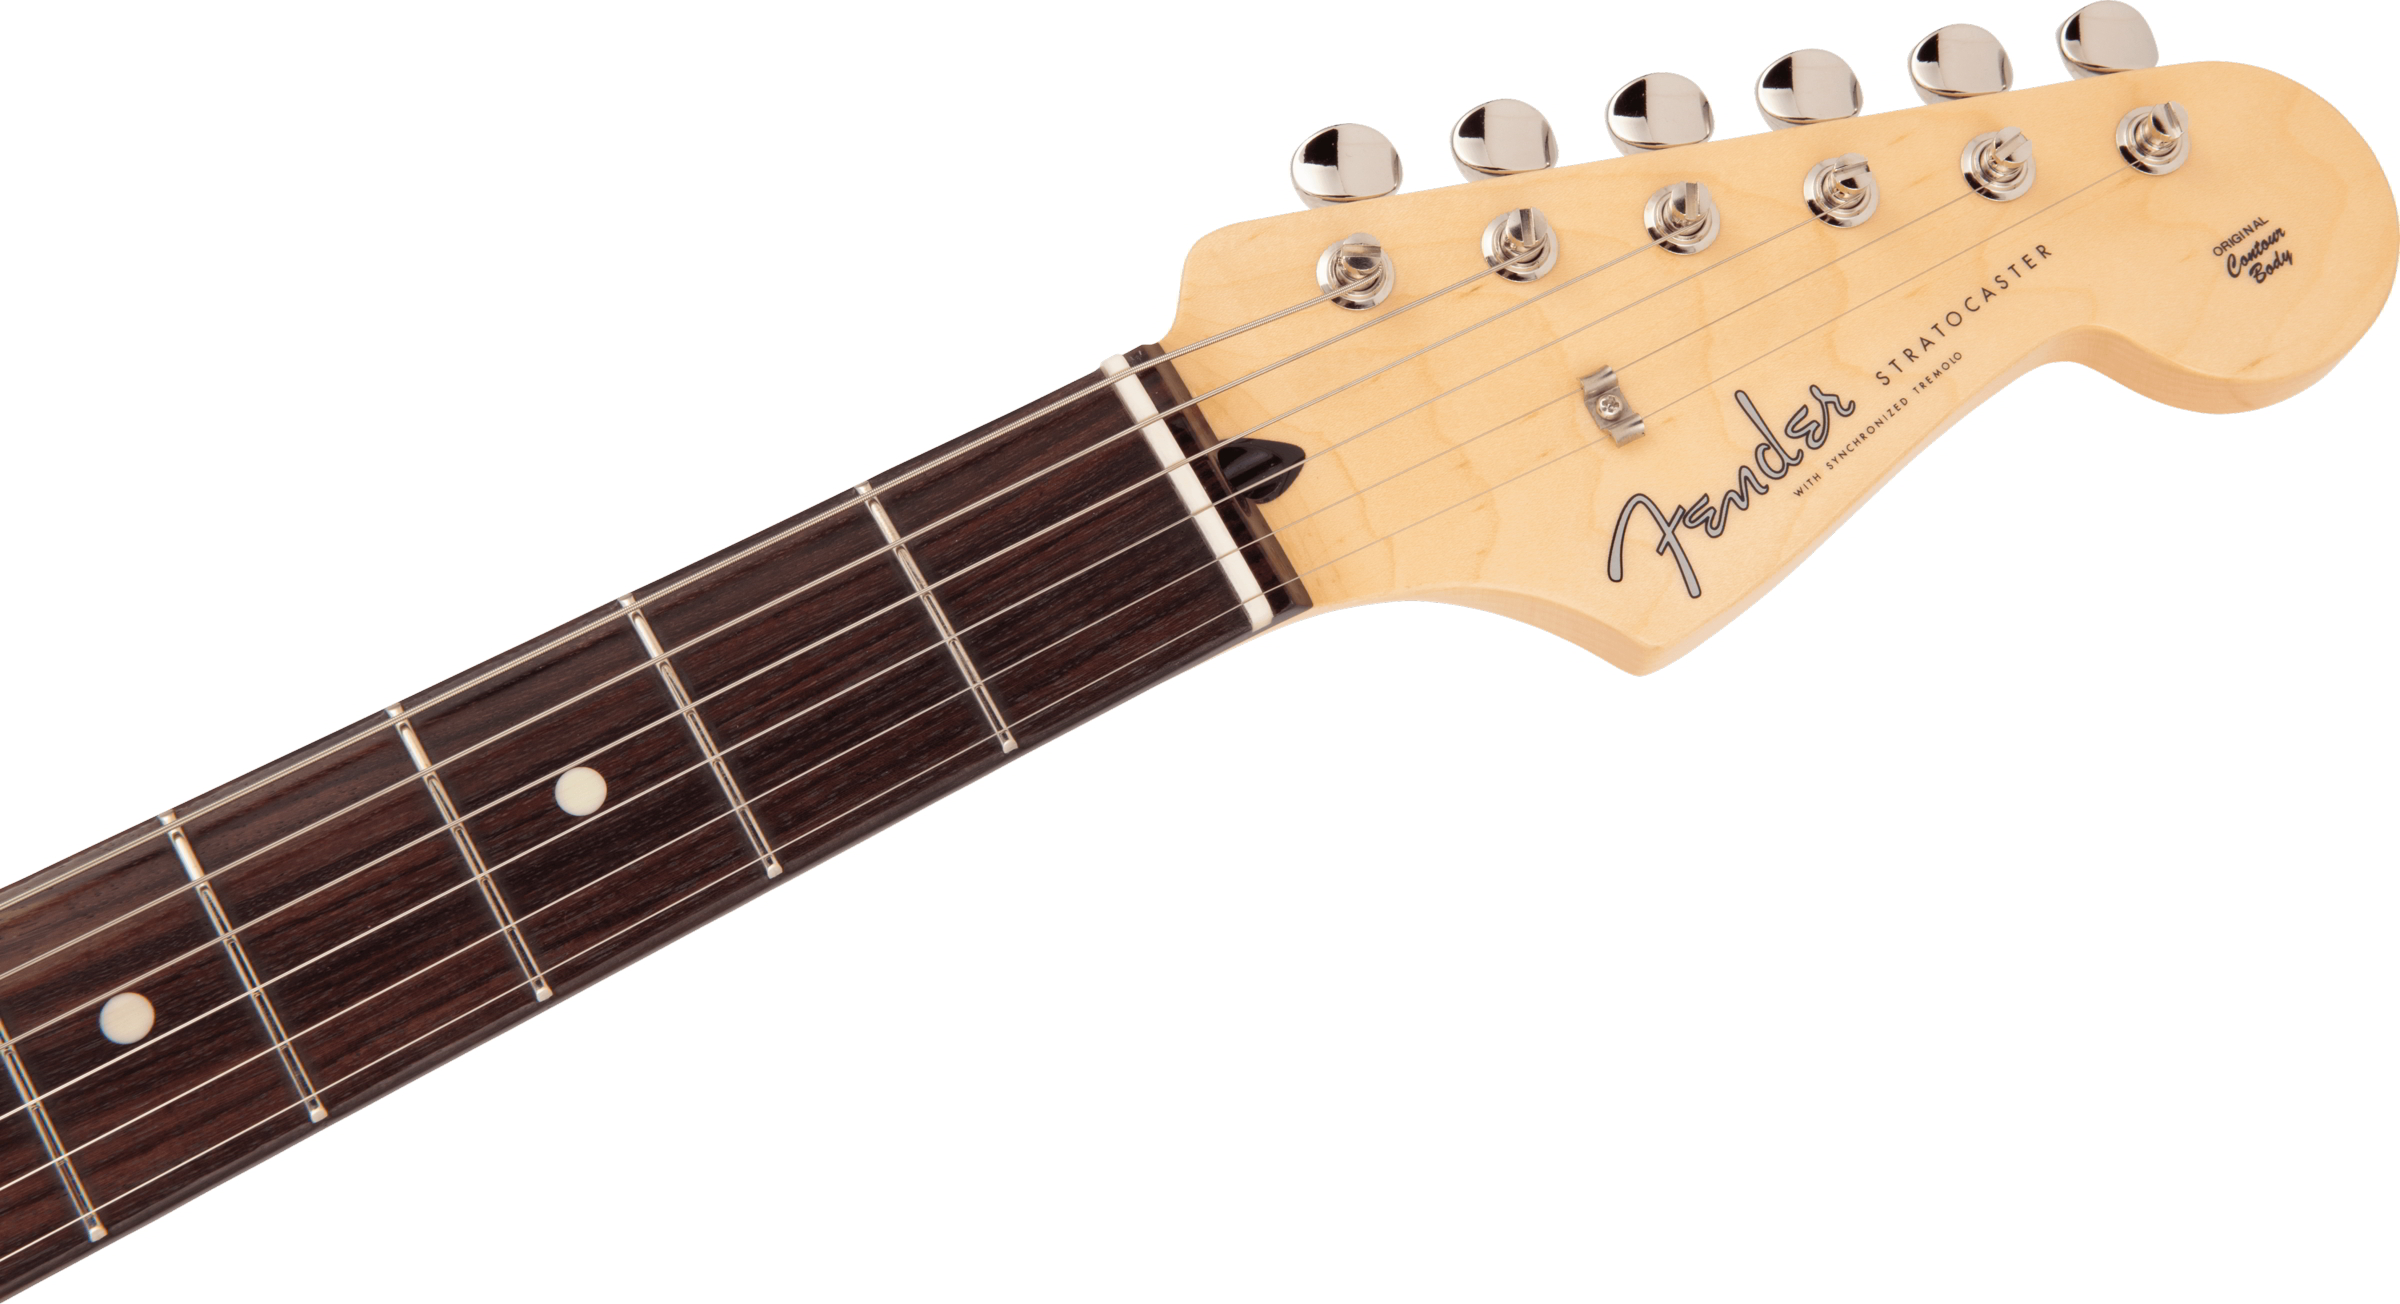 Made in Japan Hybrid II Stratocaster, Rosewood Fingerboard, Black追加画像